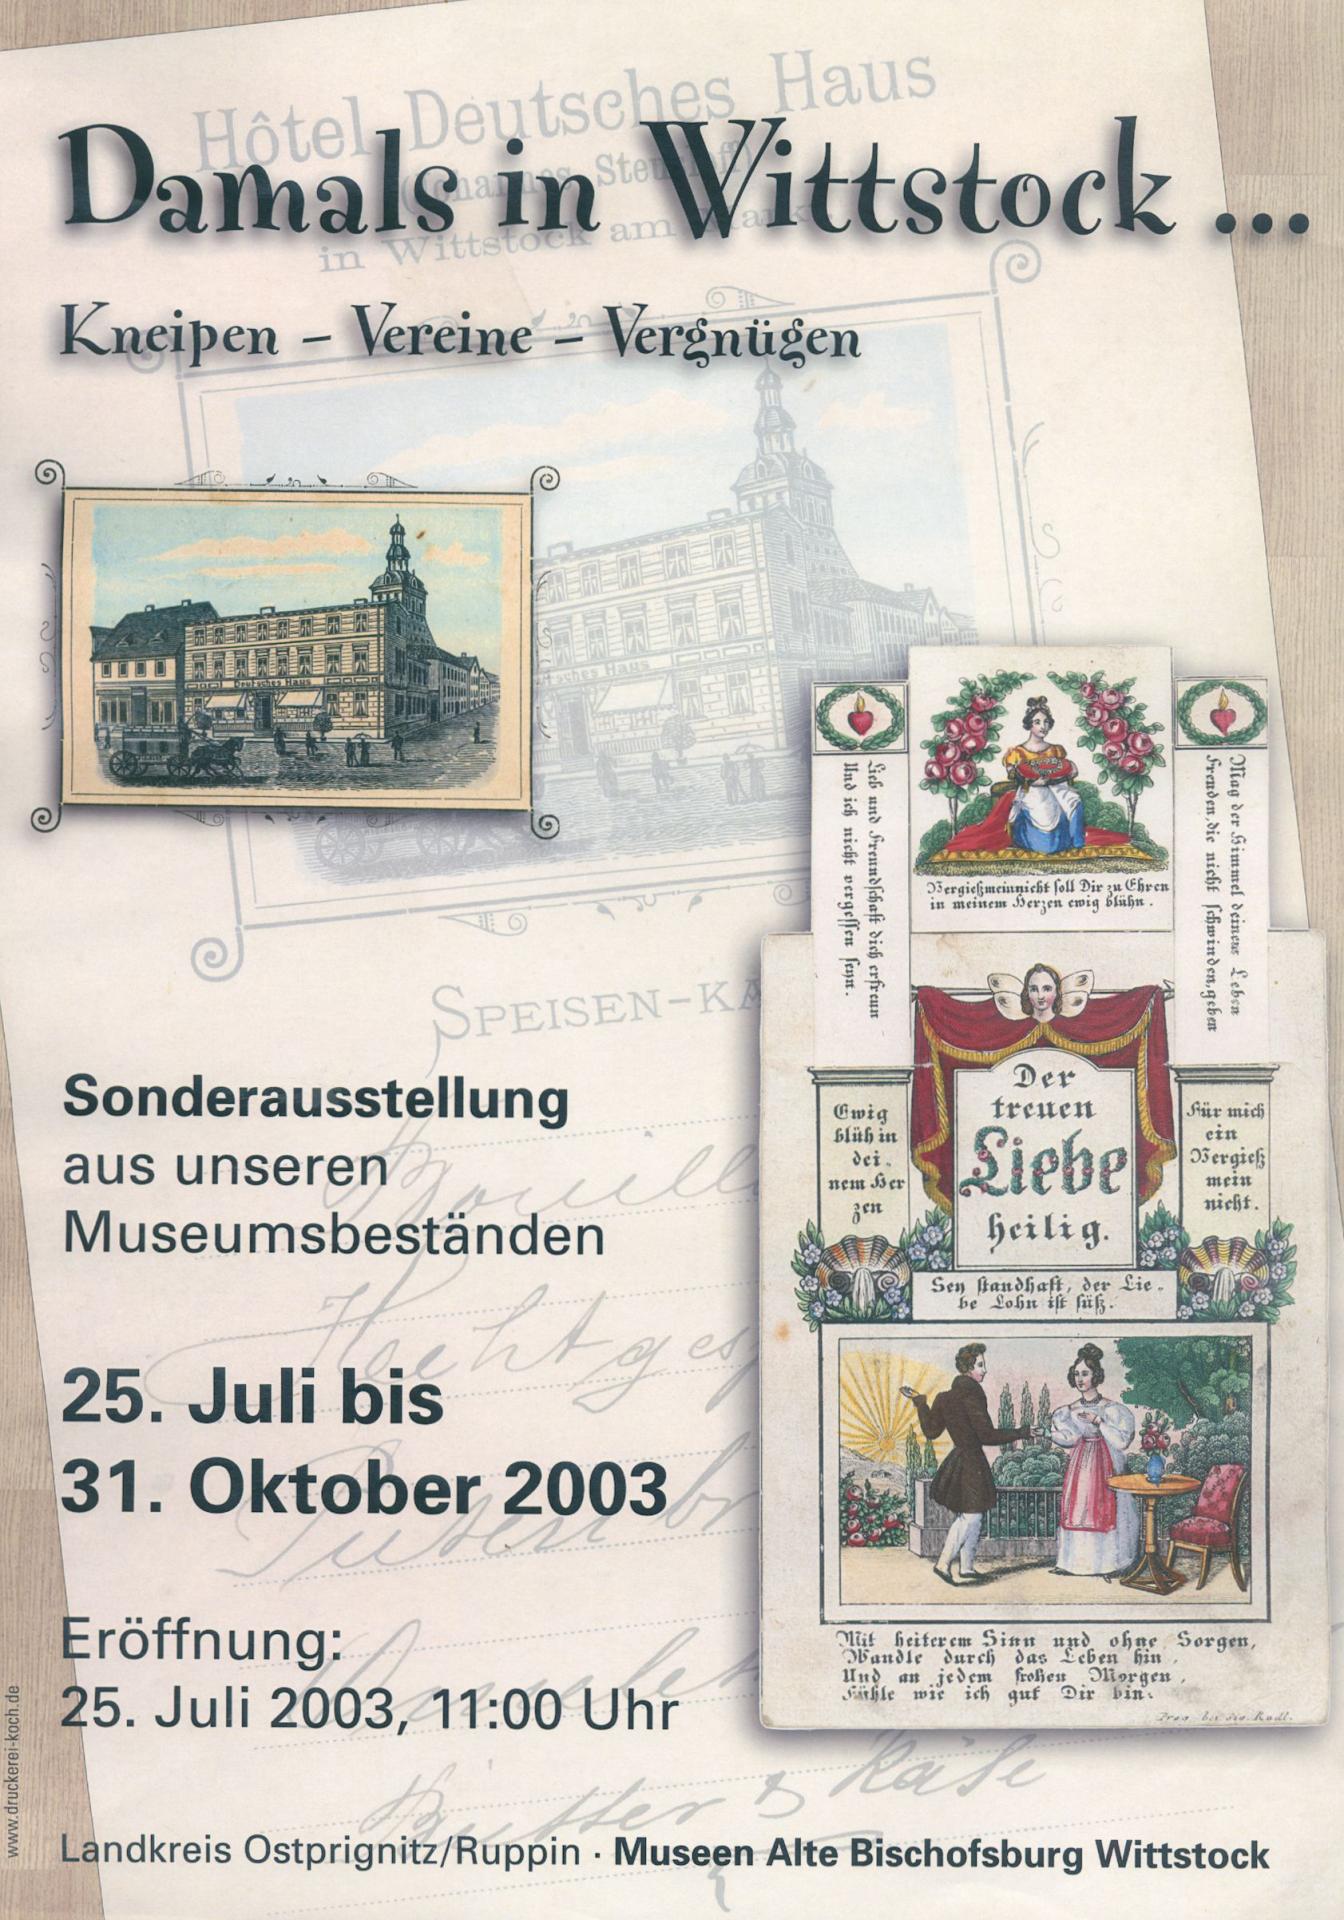 2003 Damals in Wittstock... Kneipen - Vereine - Vergnügen